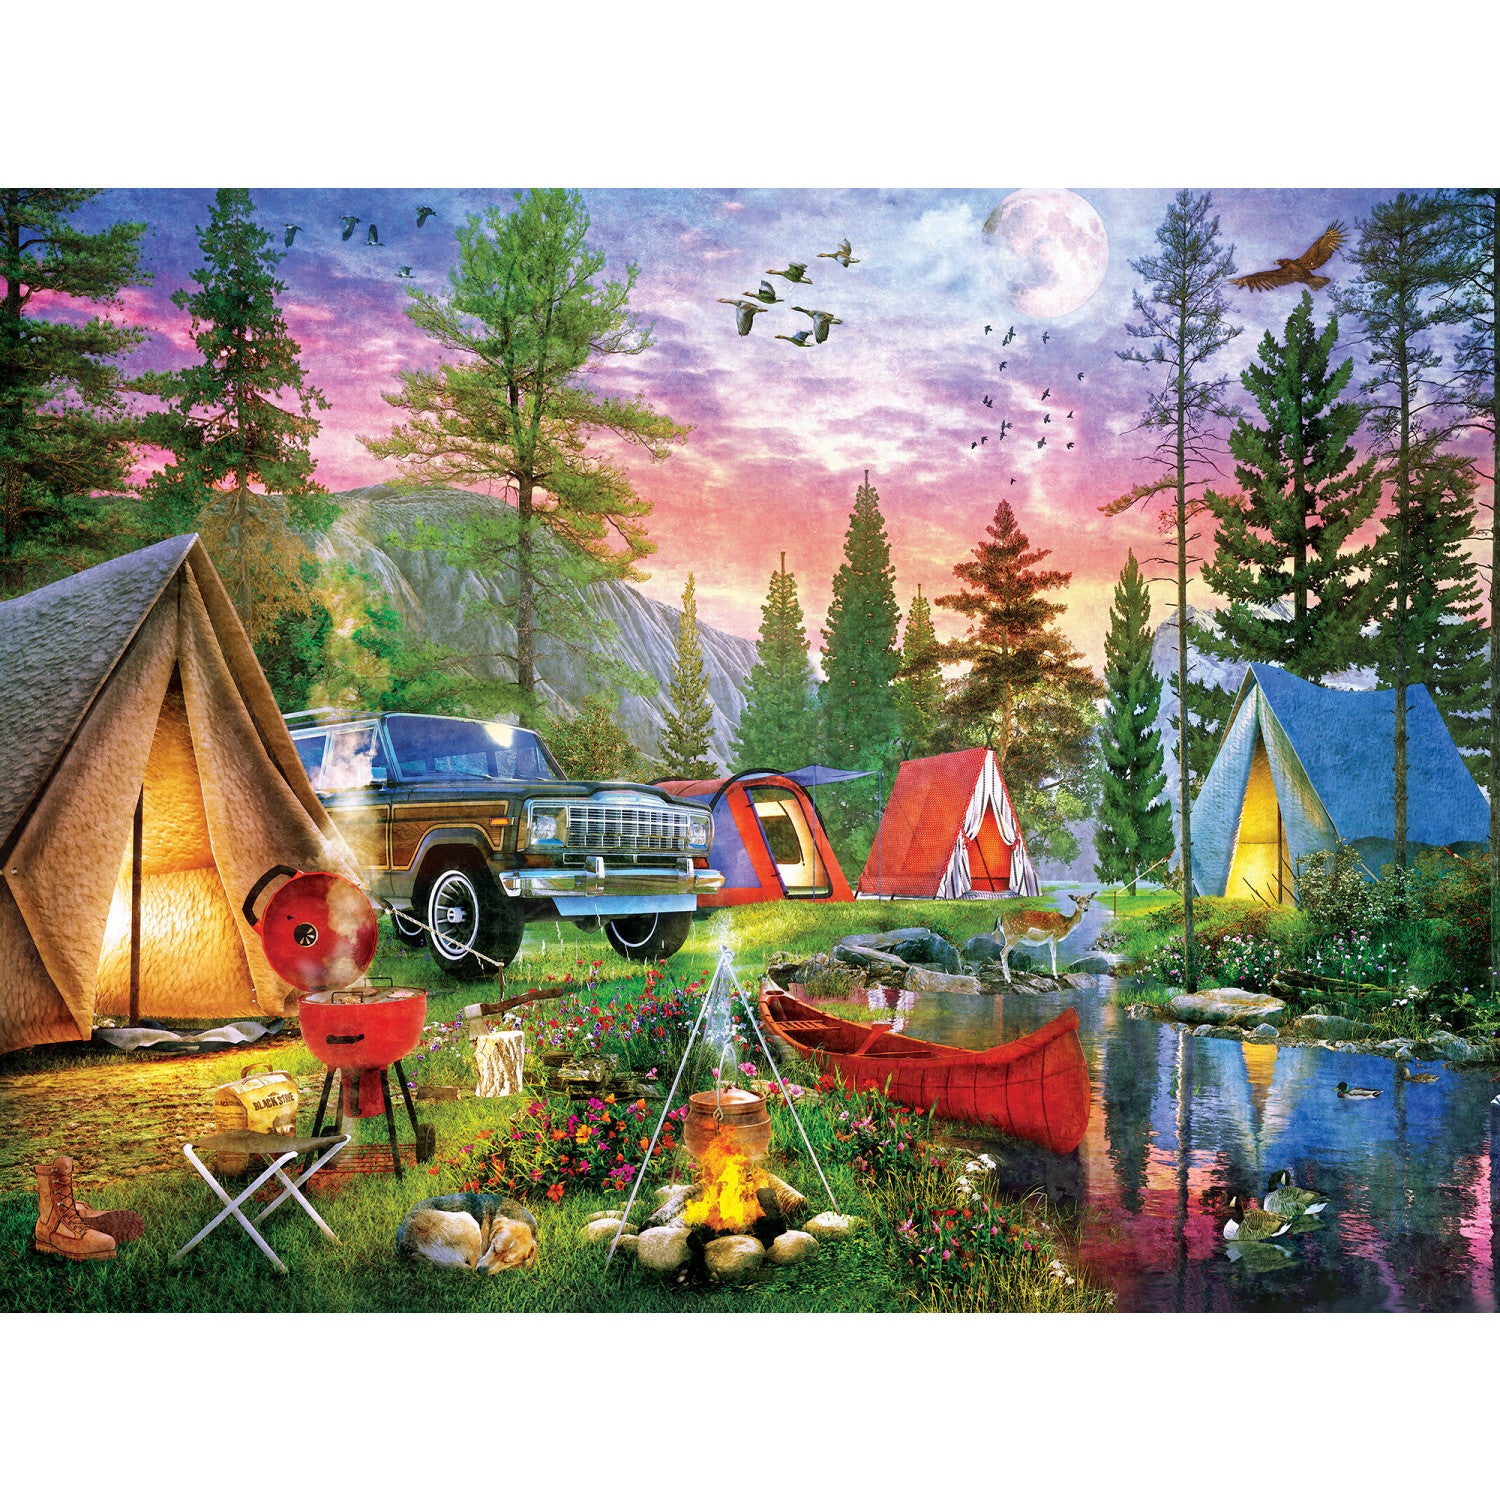 Campside - Moonlight Camping 300 Piece EZ Grip Puzzle